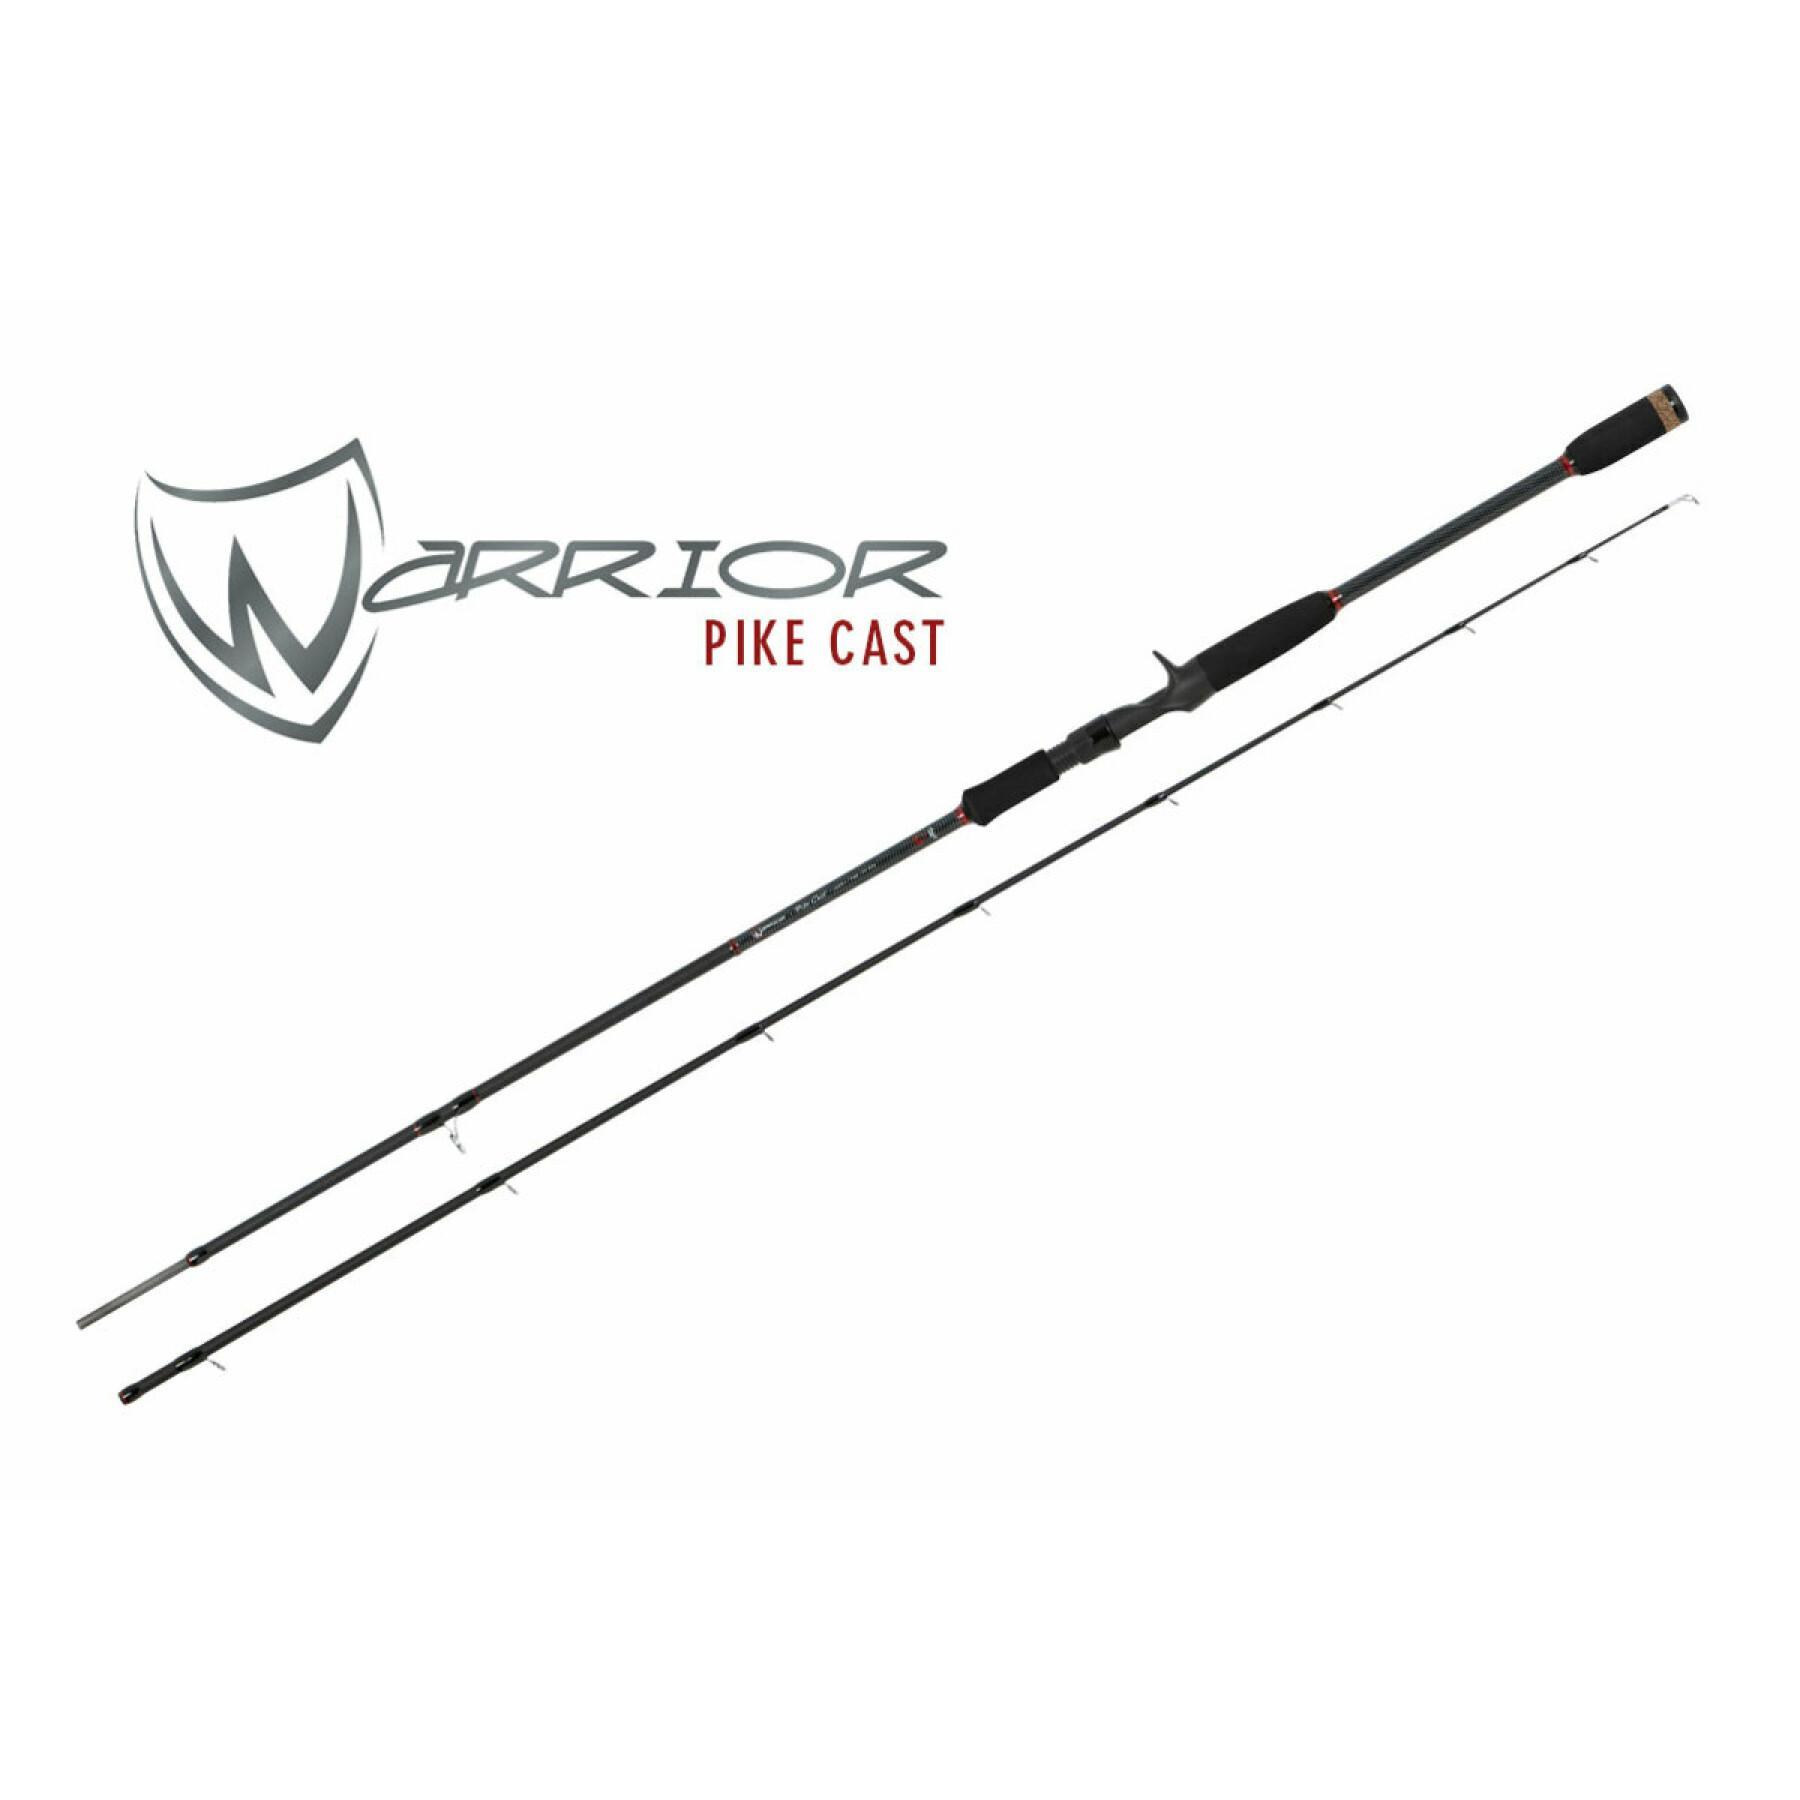 Canne Fox Rage warrior pike cast 225 cm 20-80 g